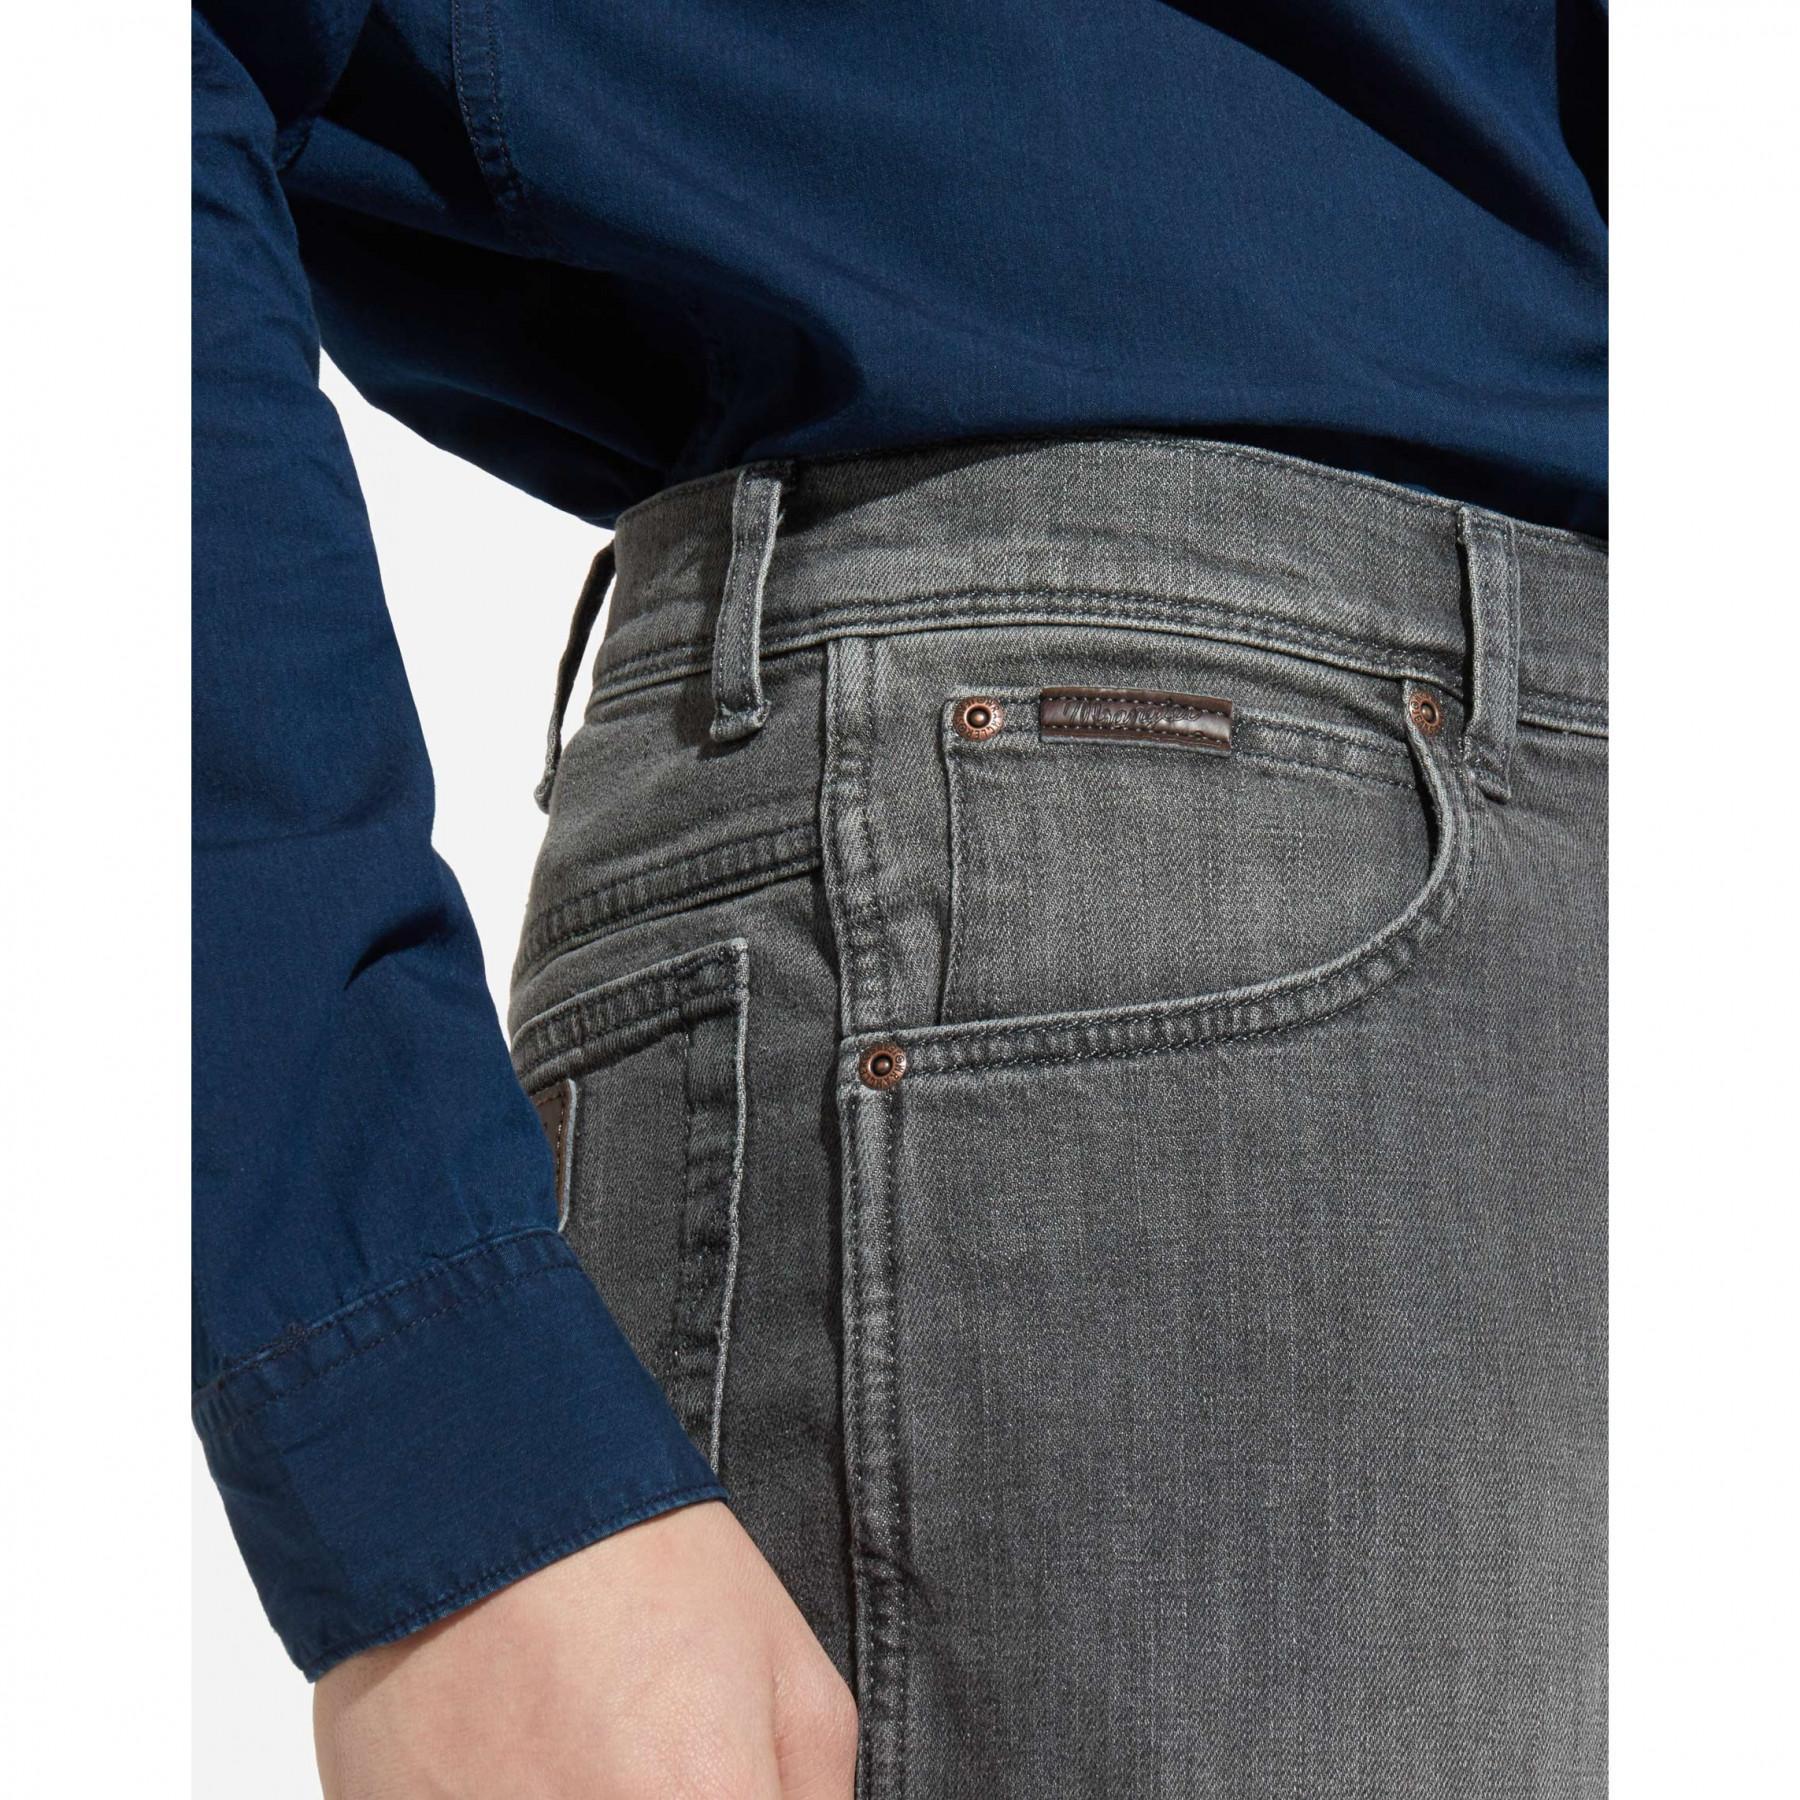 Jeans Wrangler texas stretch graze